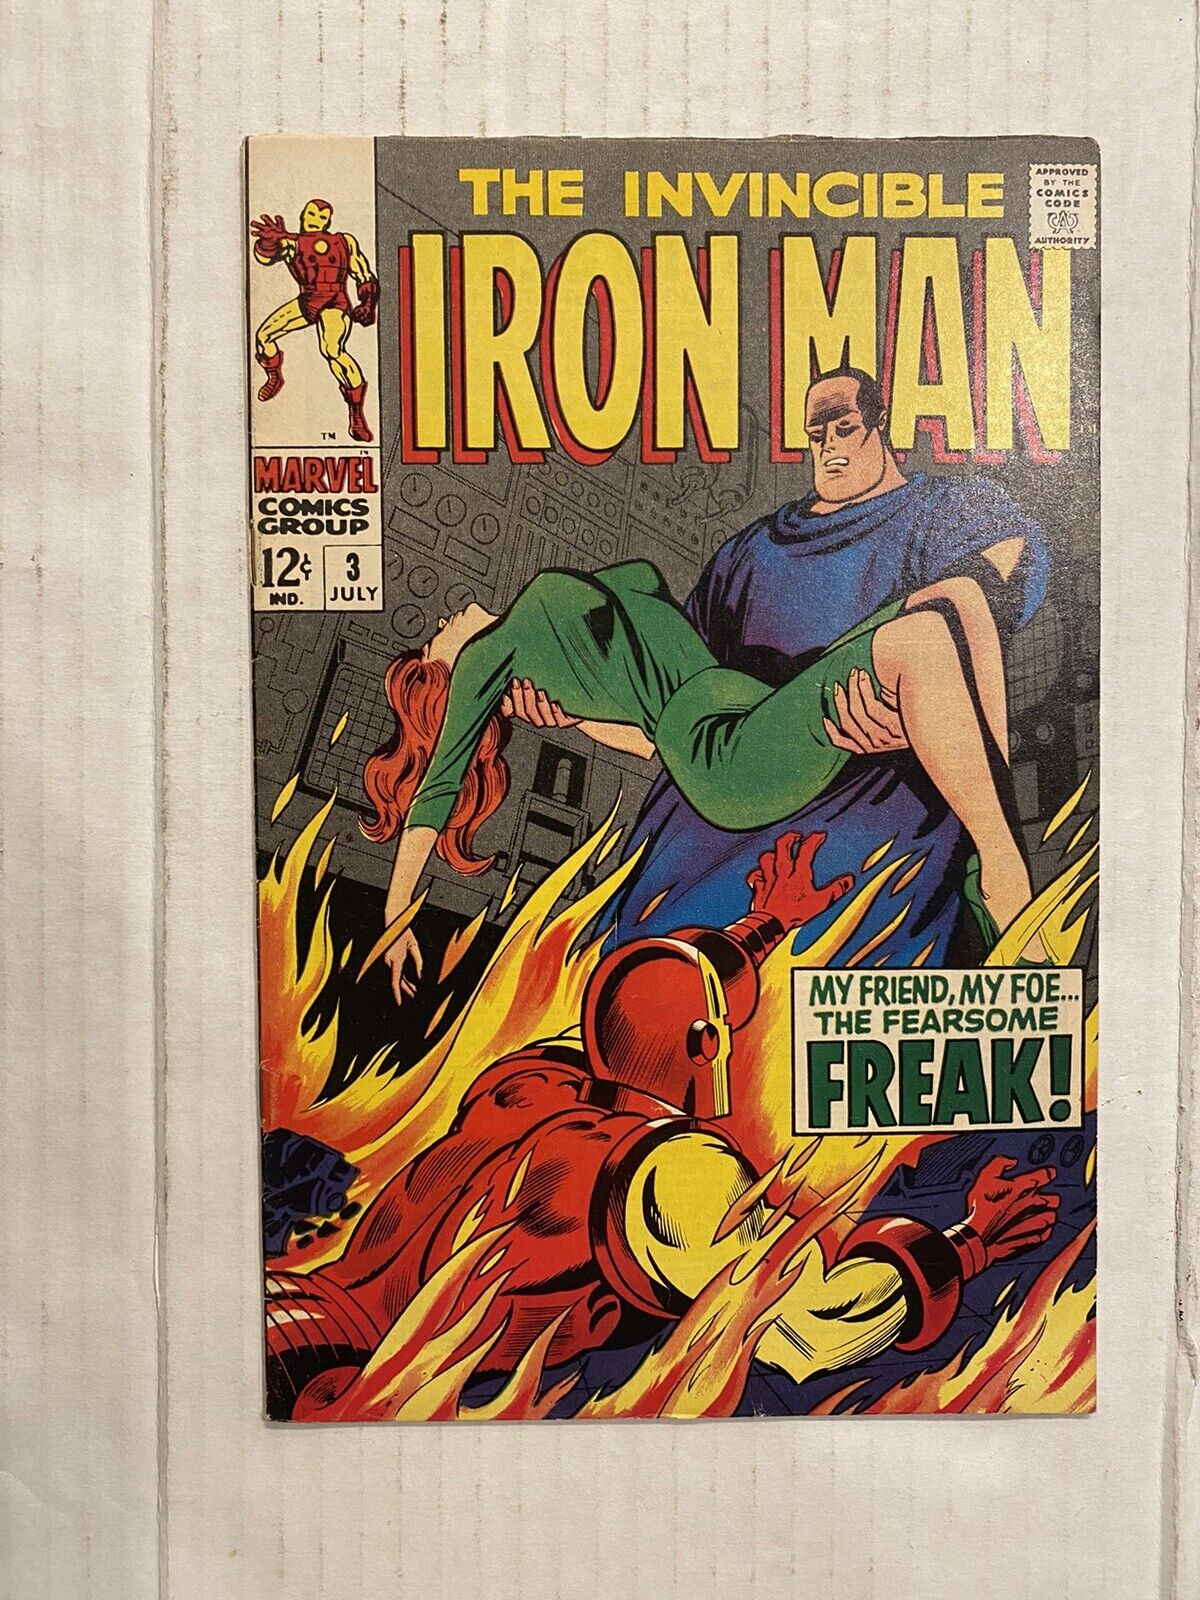 Iron Man #3 (1968) 1st Appearance of Happy Hogan as The Freak